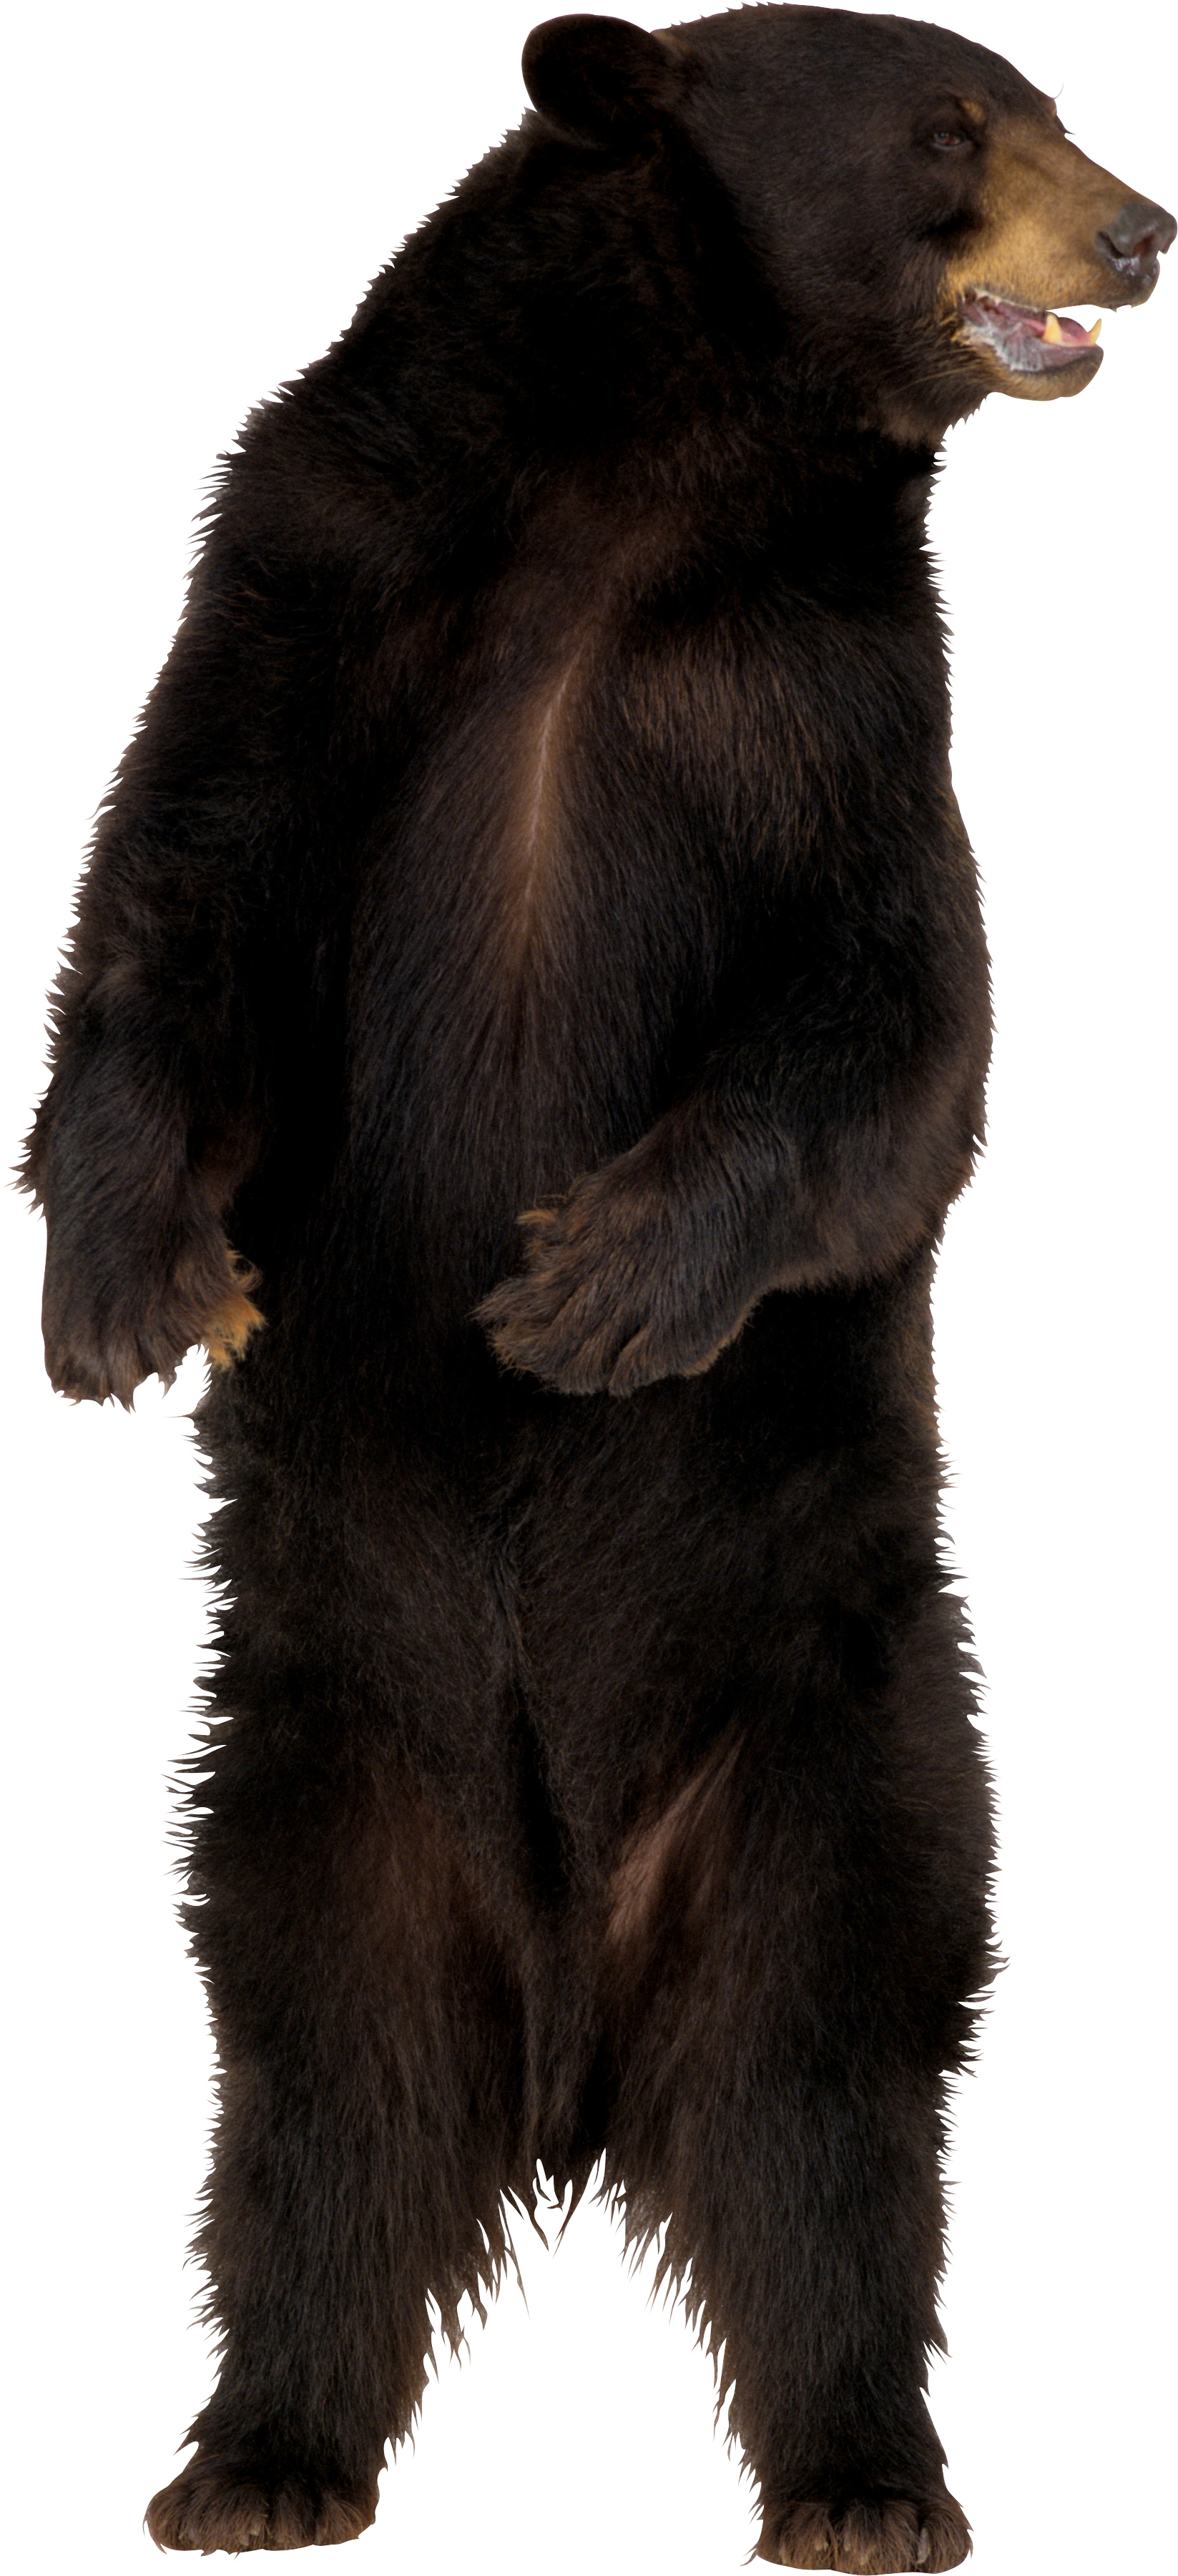 Bear Transparent Background, Cute Bear PNG, Black, Teddy, Polar Bear